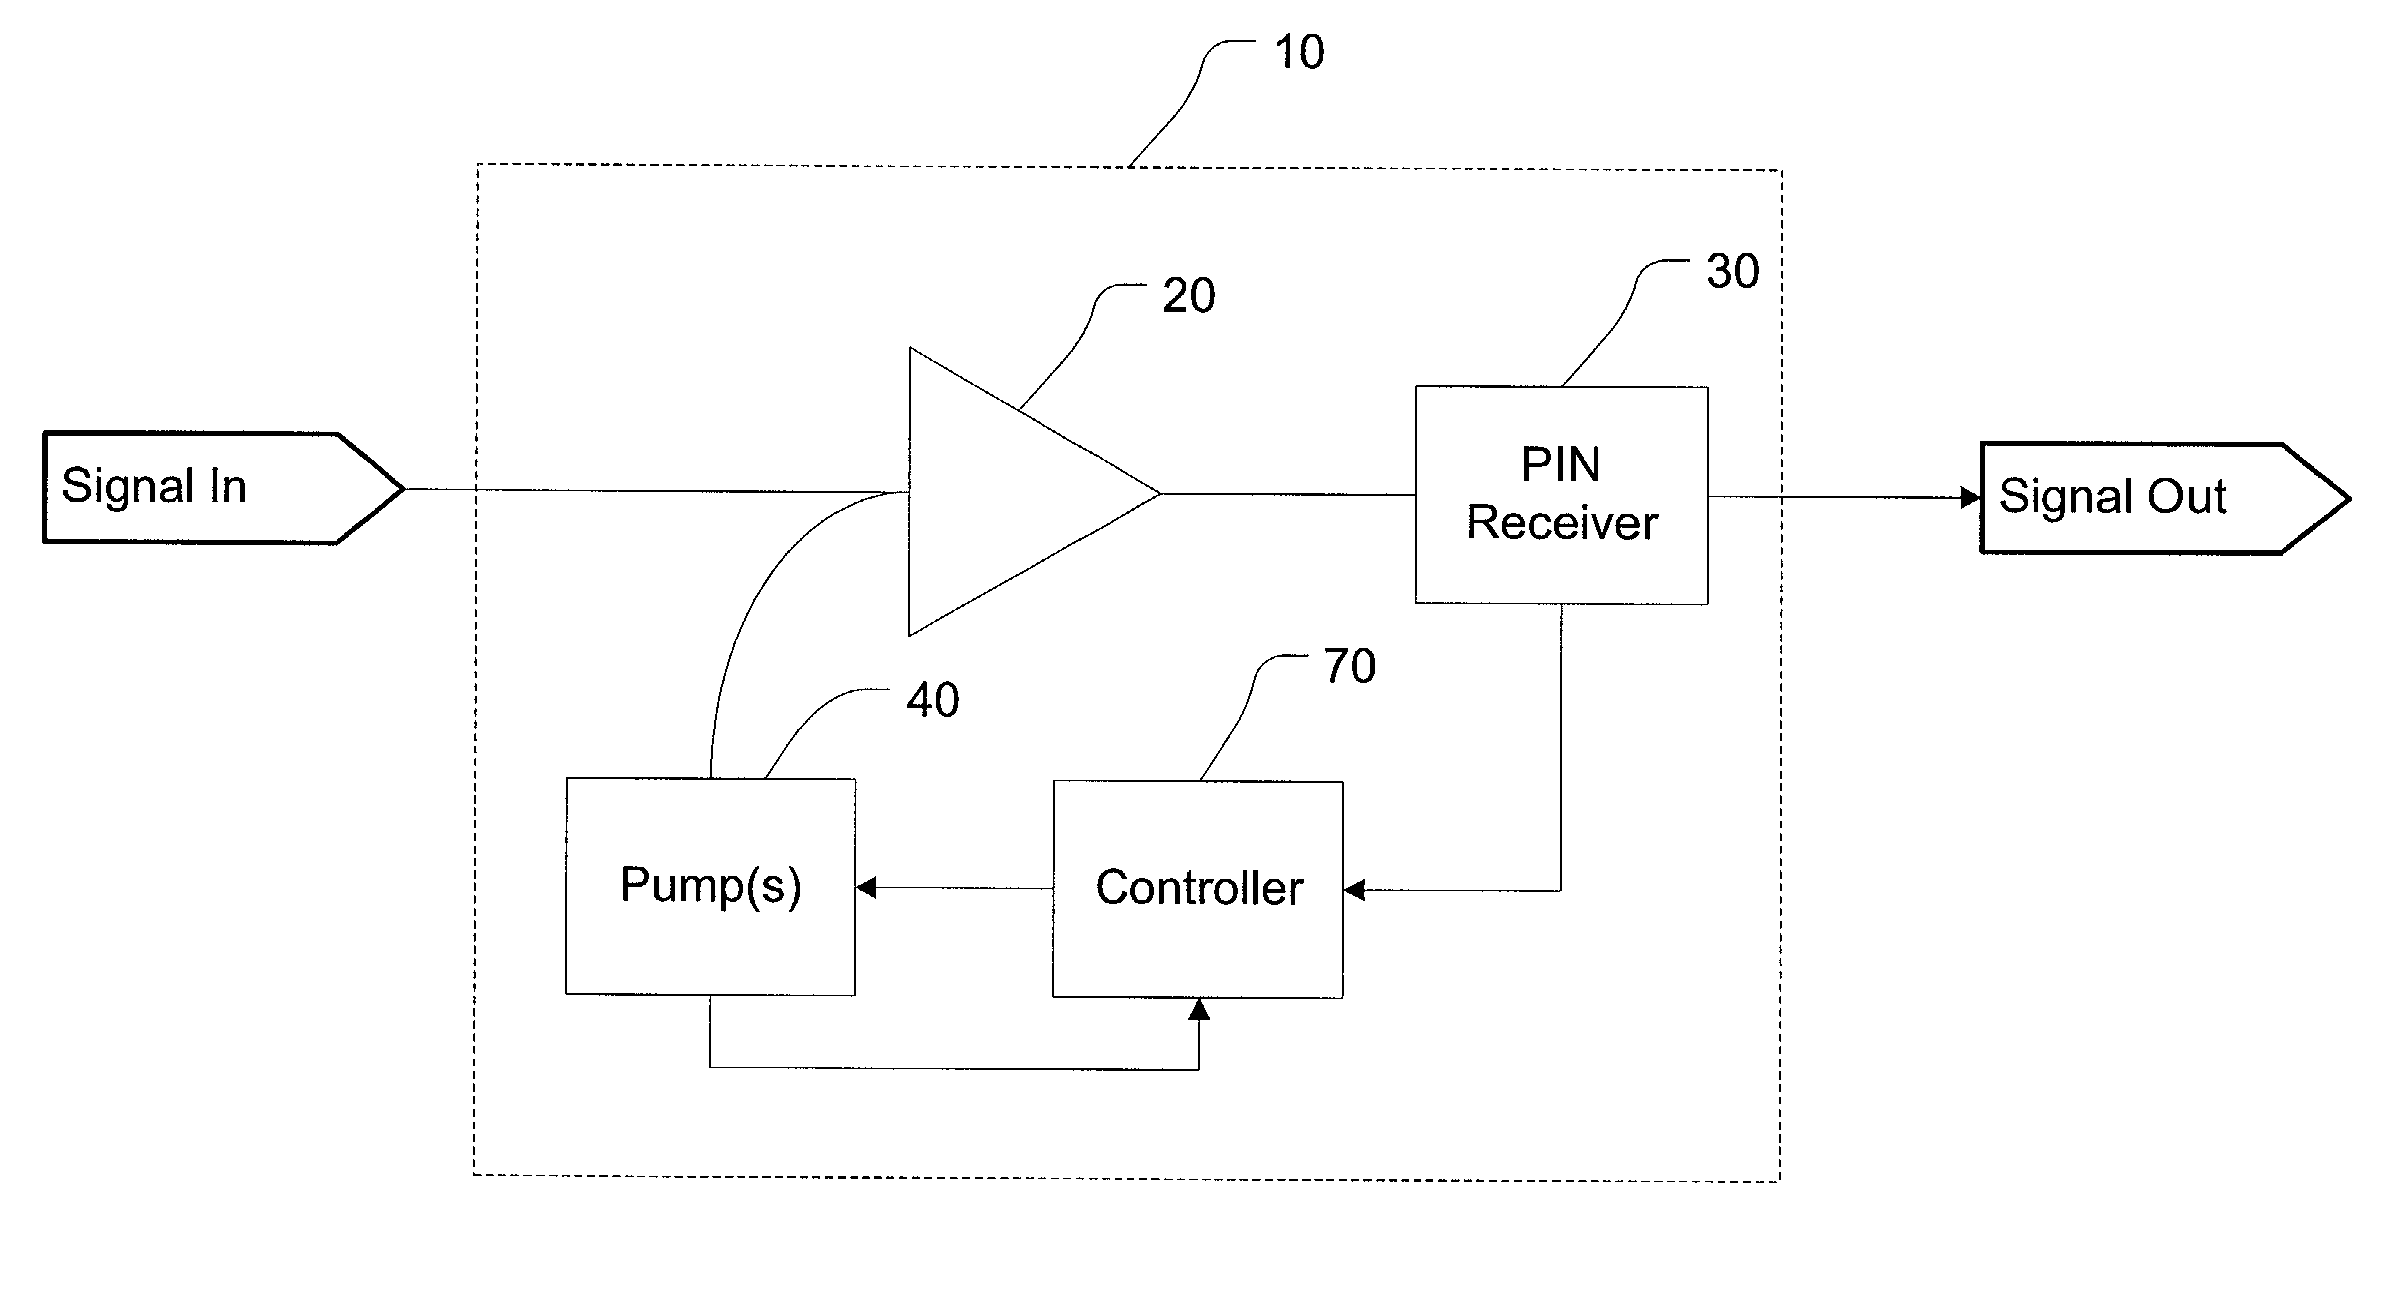 Optical pre-amplifier apparatus and method for receiver performing gain control according to los declaration